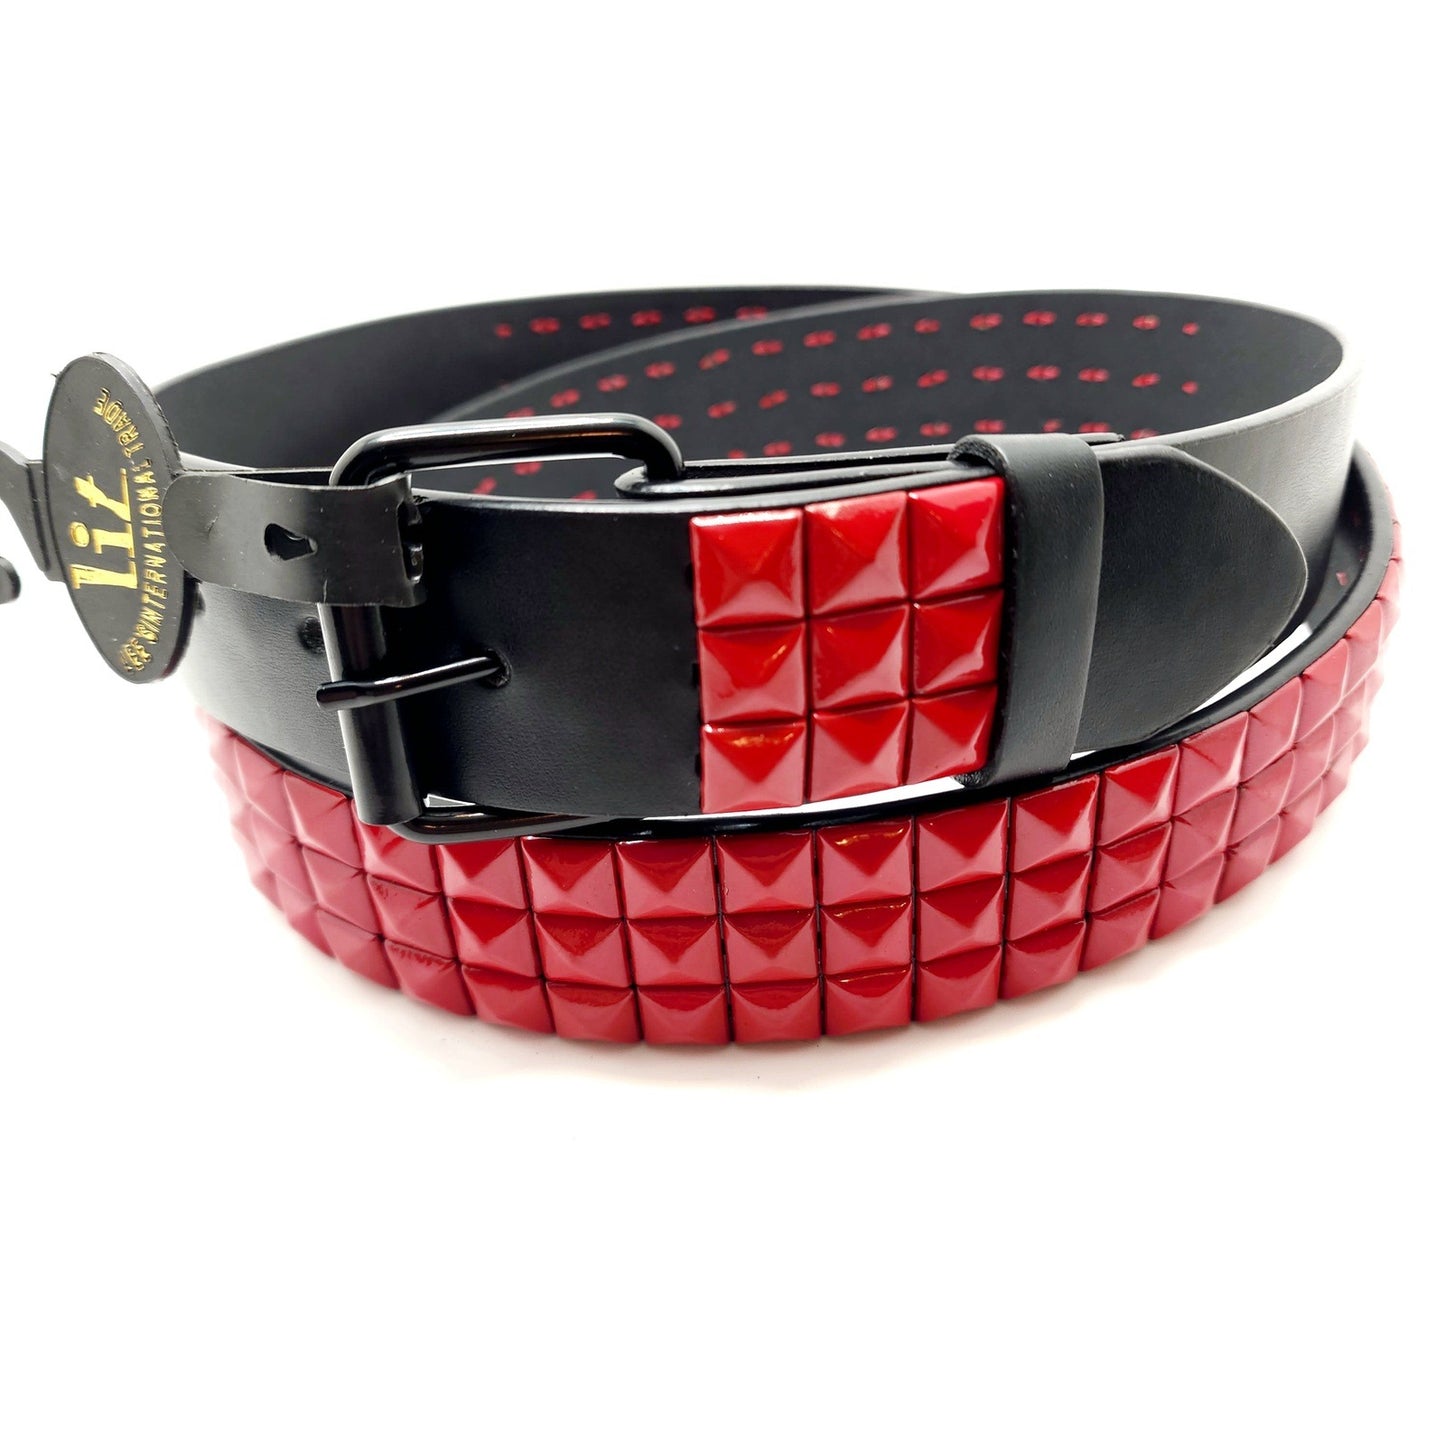 Red Pyramid Studded Leather Belt Punk shop.AxeDr.com Black White Belt, Emo, Goth belt, Hot Topic, Punk belt, Rock n roll, Rockstar, Studded belt, Studded